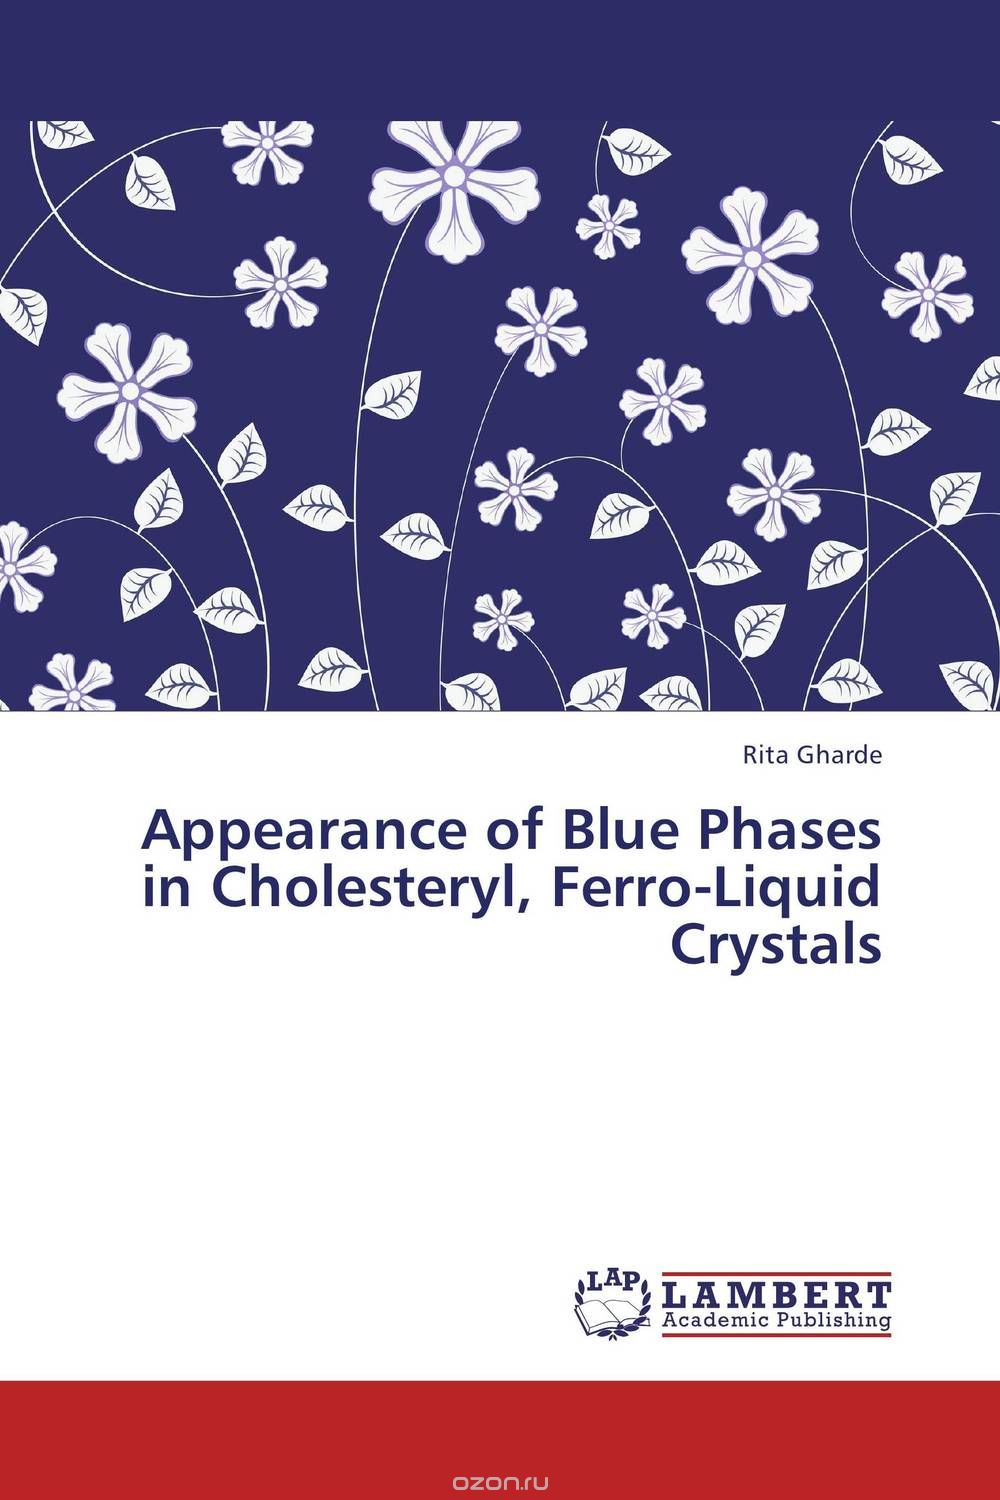 Скачать книгу "Appearance of Blue Phases in Cholesteryl, Ferro-Liquid Crystals"